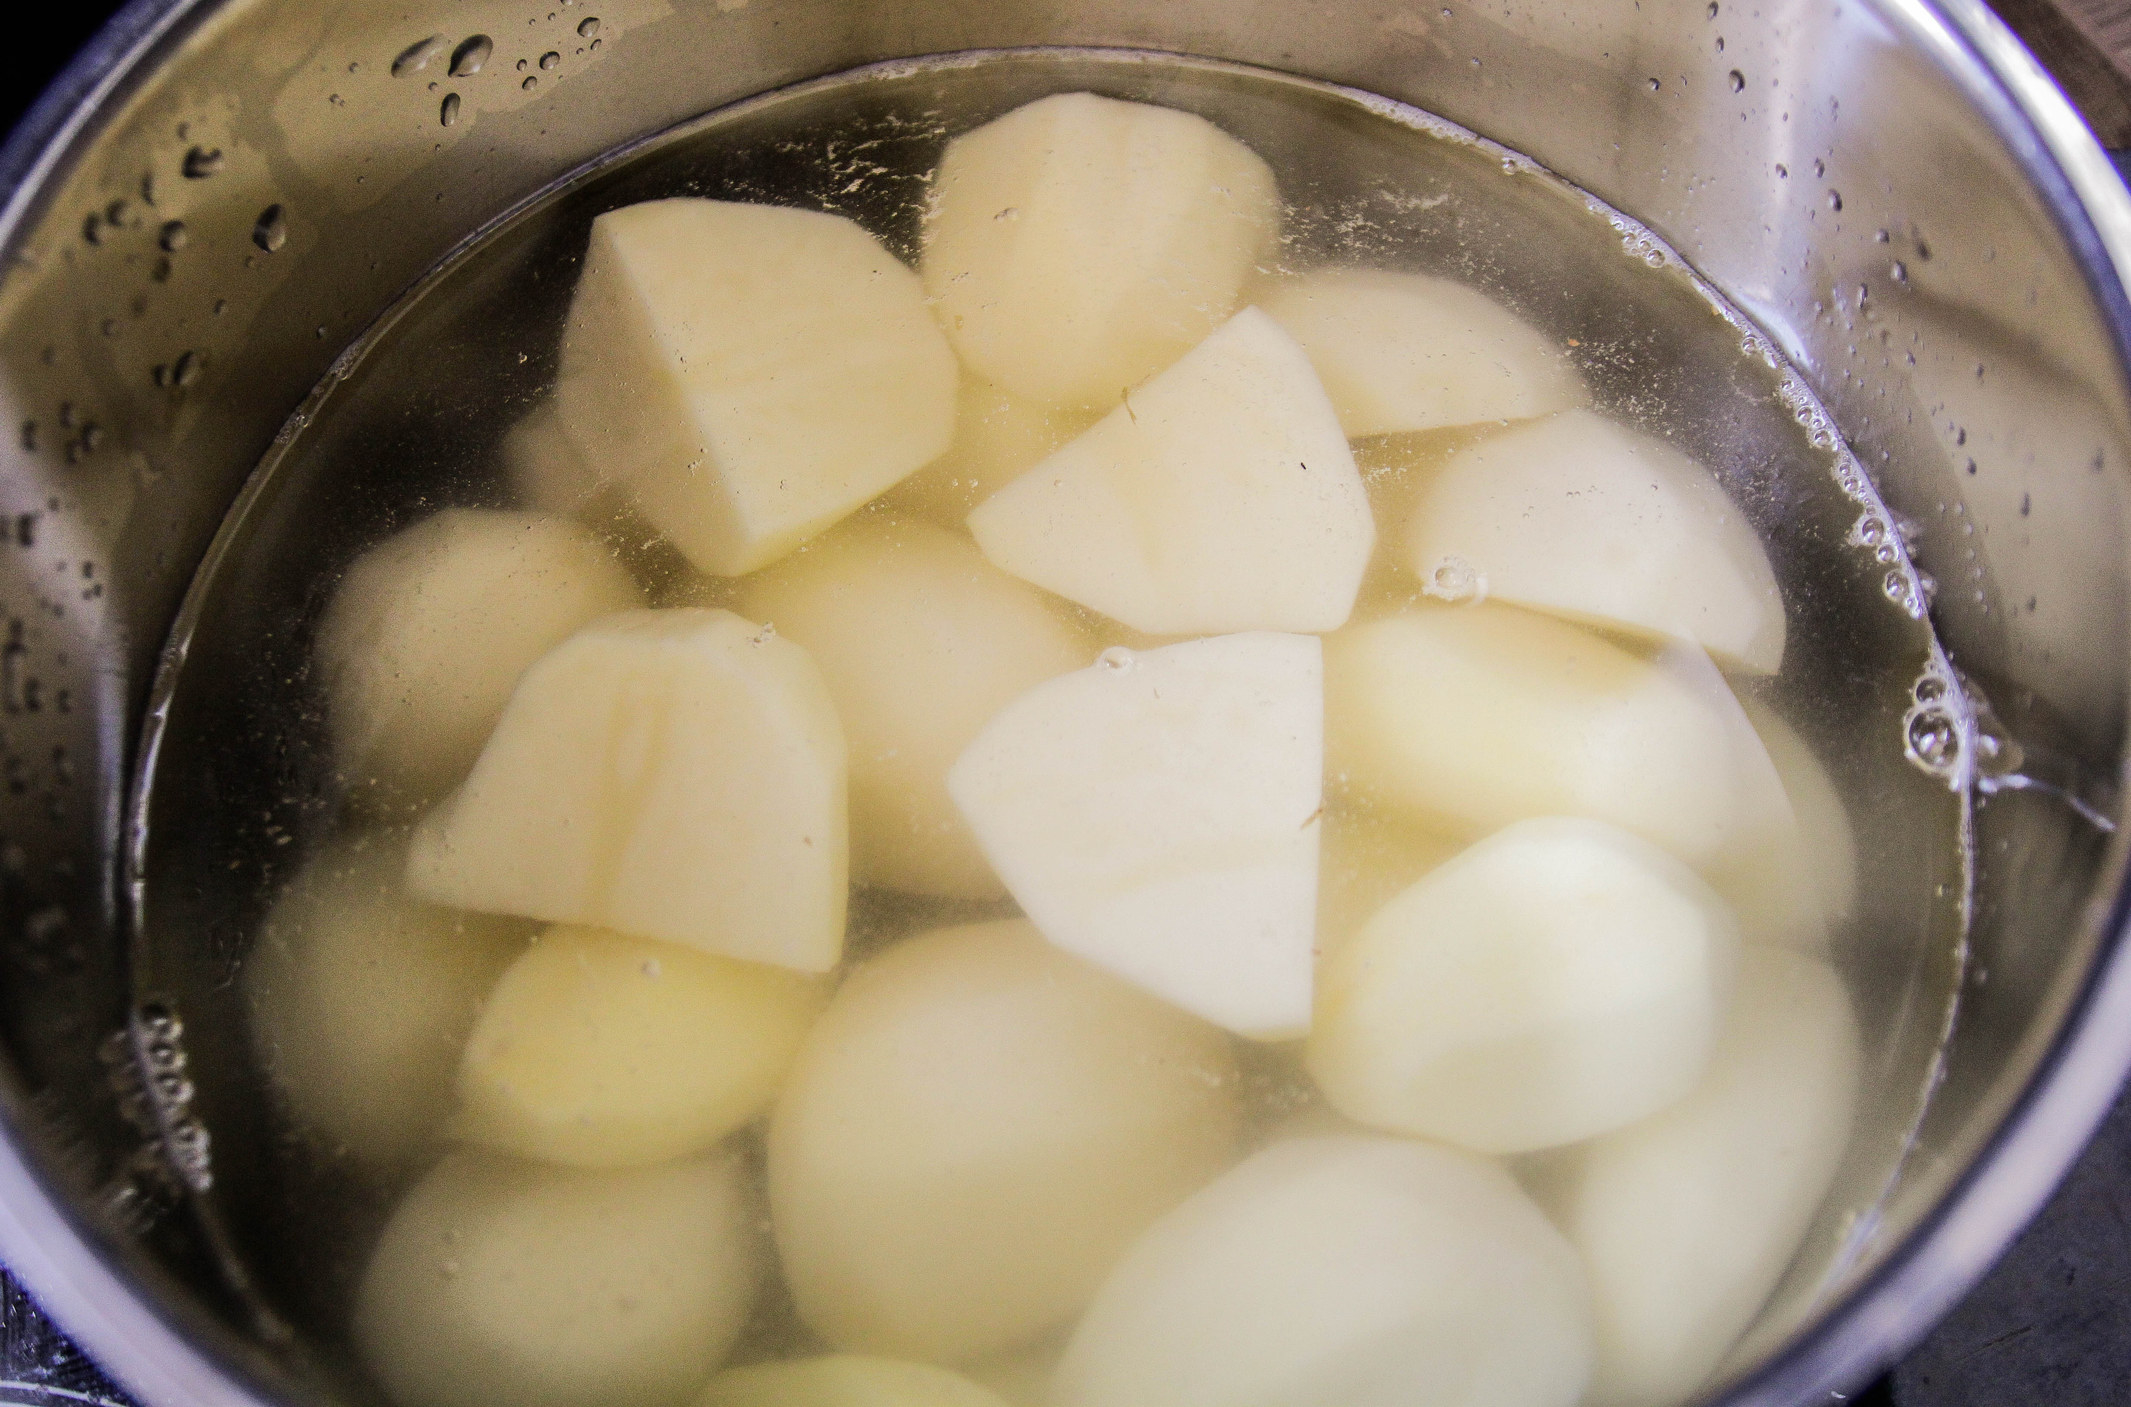 Boiled chopped potatoes